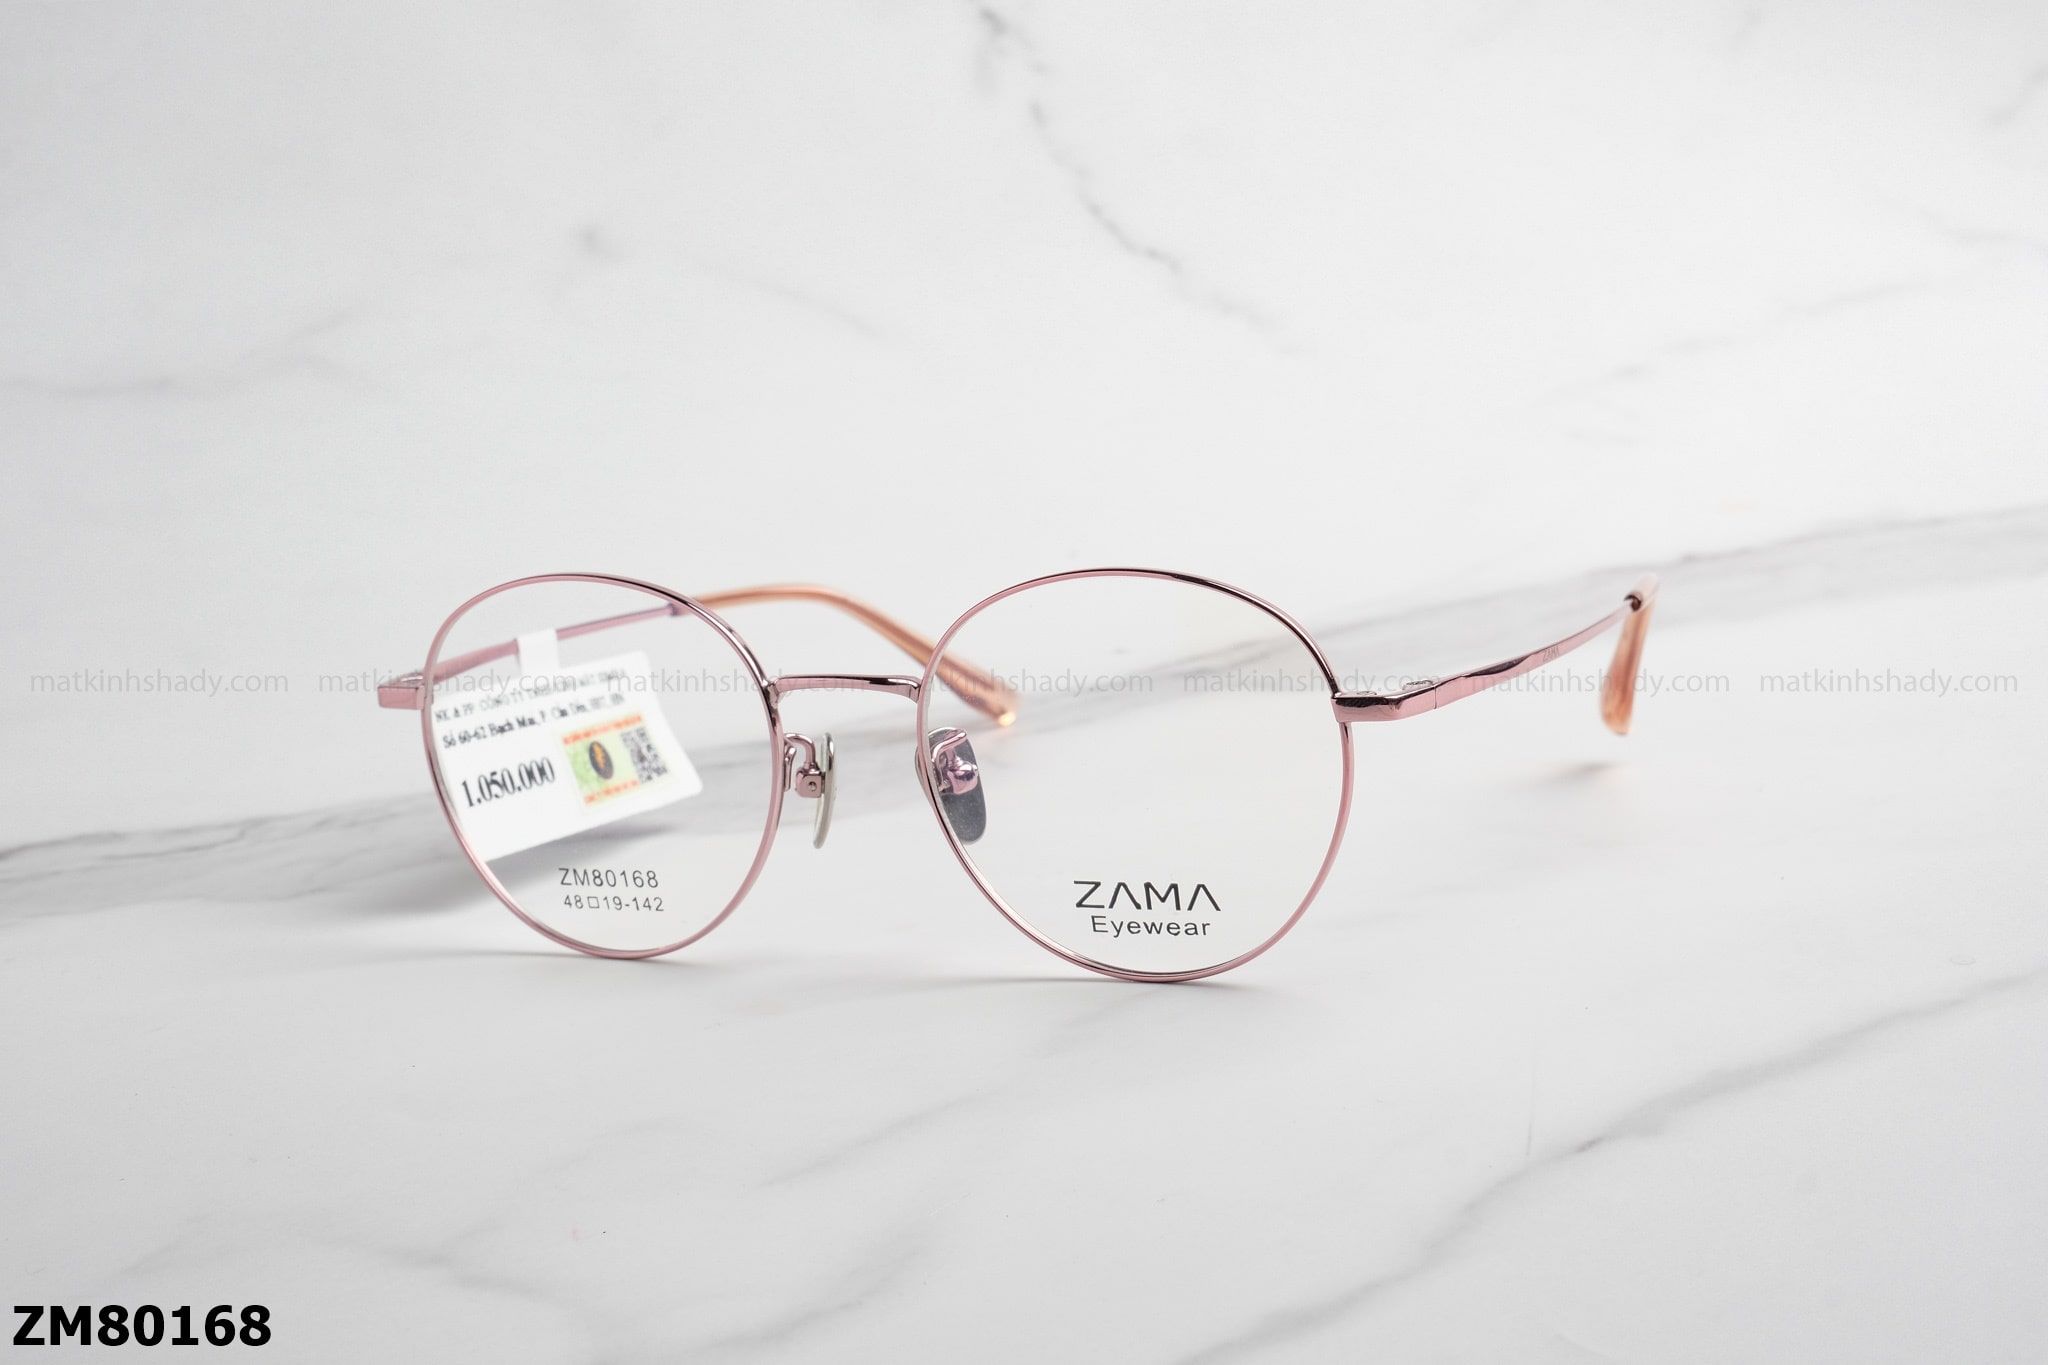  ZAMA Eyewear - Glasses - ZM80168 